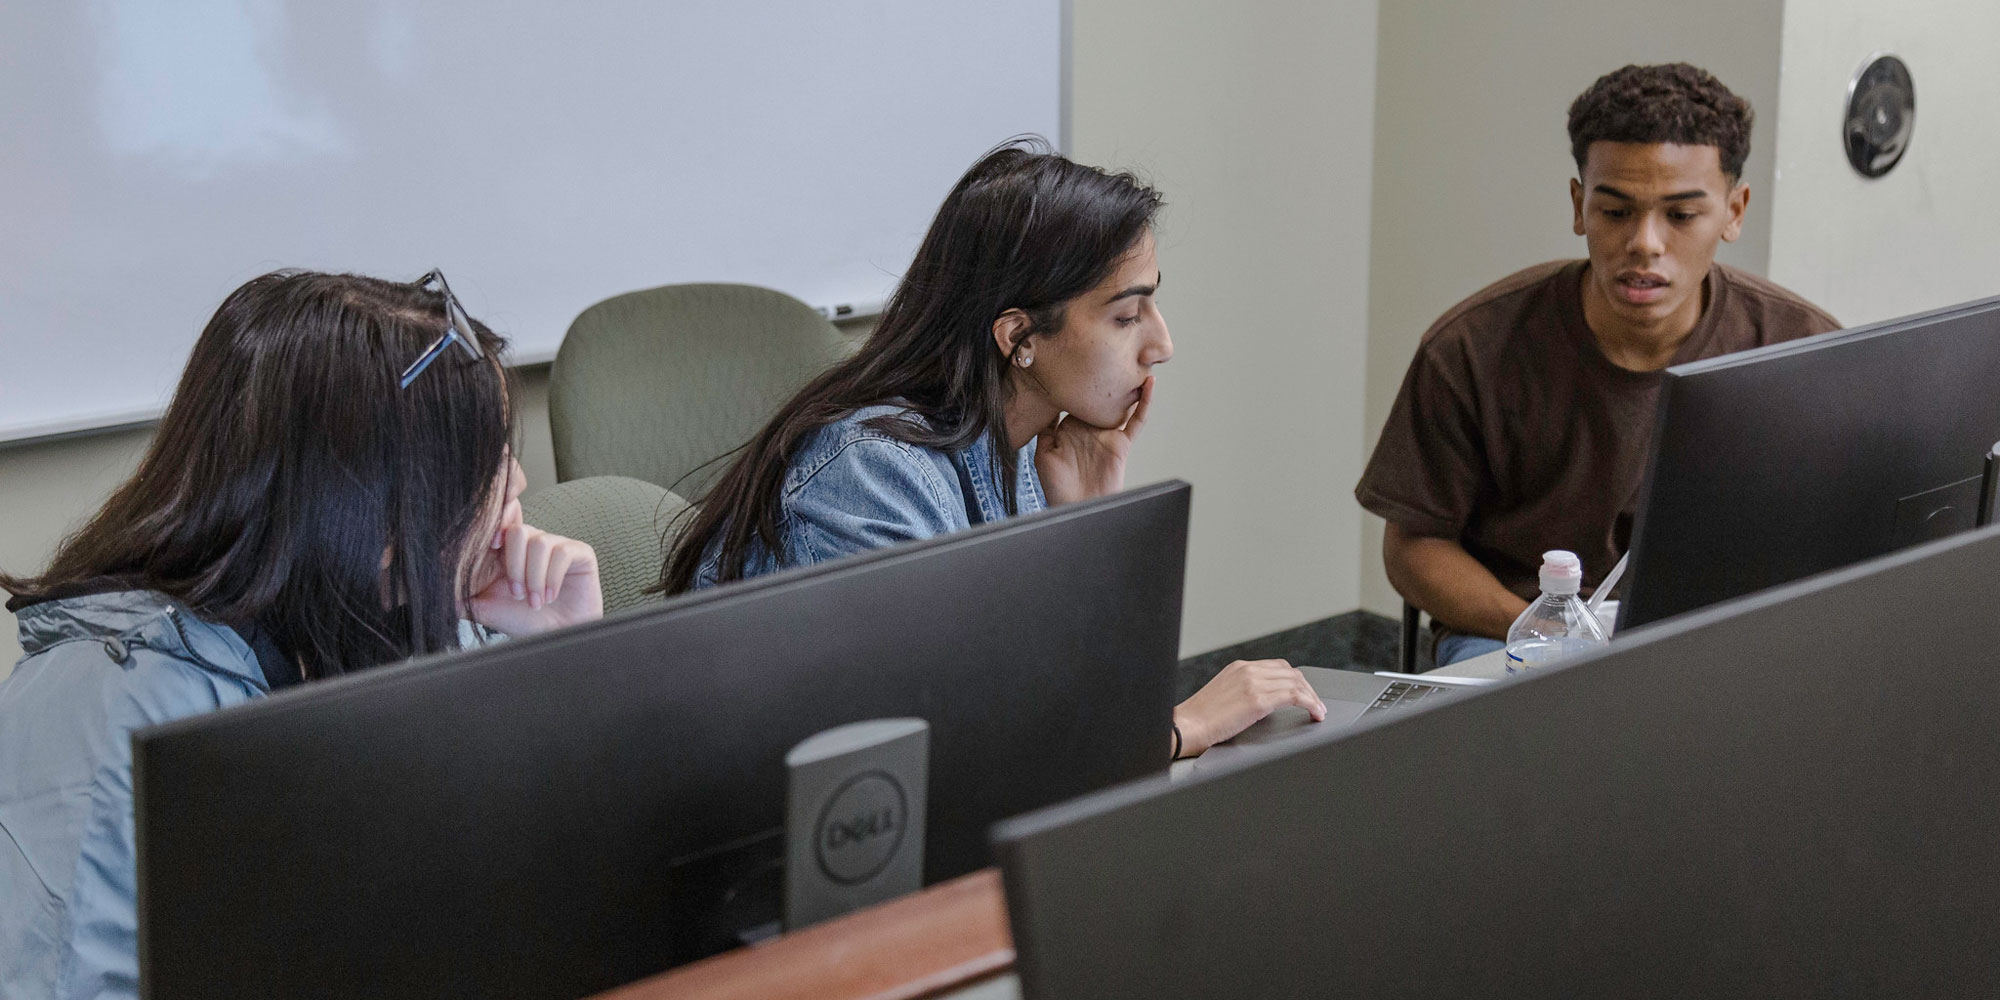 Three students at a desk behind a few computers